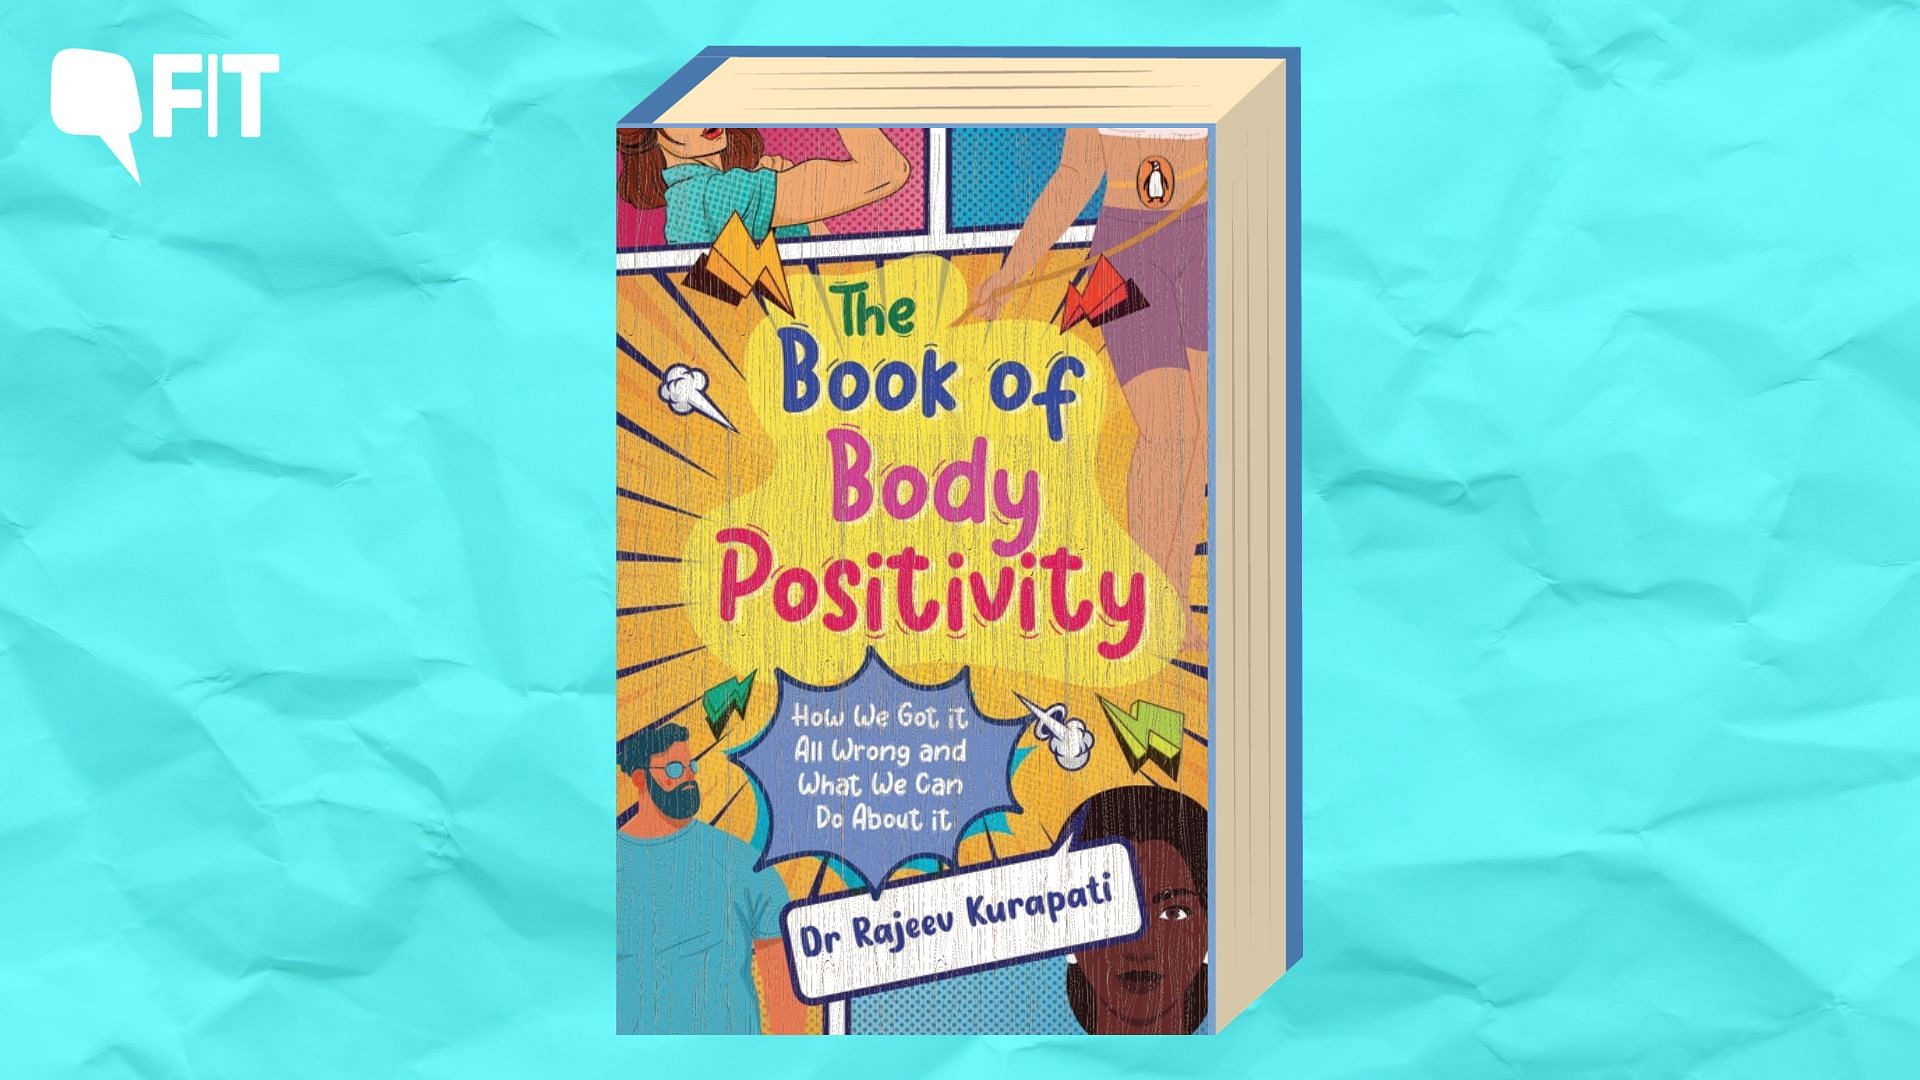 <div class="paragraphs"><p>The book of body positivity: Book Excerpt</p></div>